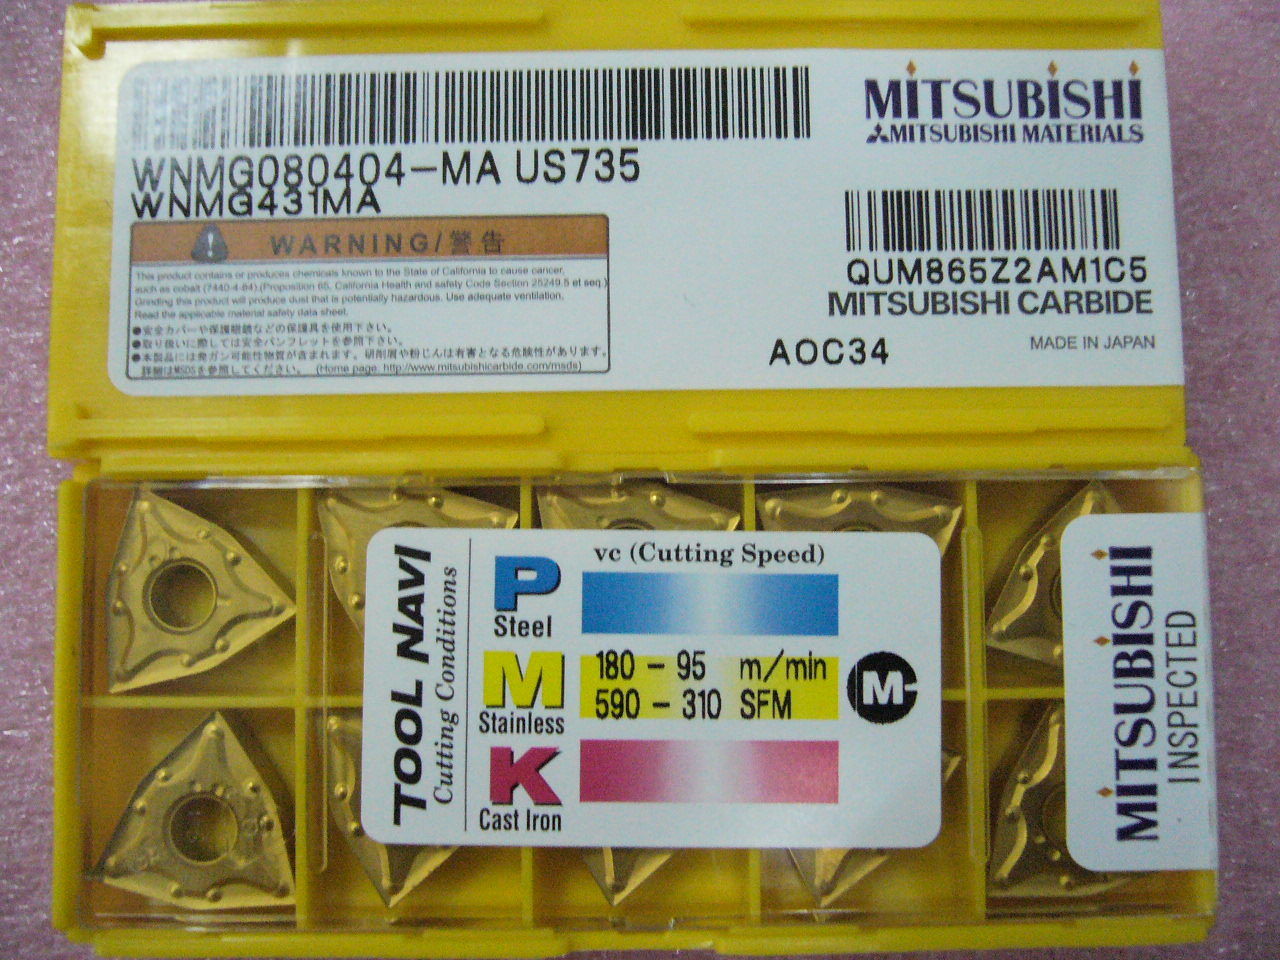 QTY 20x Mitsubishi WNMG431MA WNMG080404-MA US735 NEW